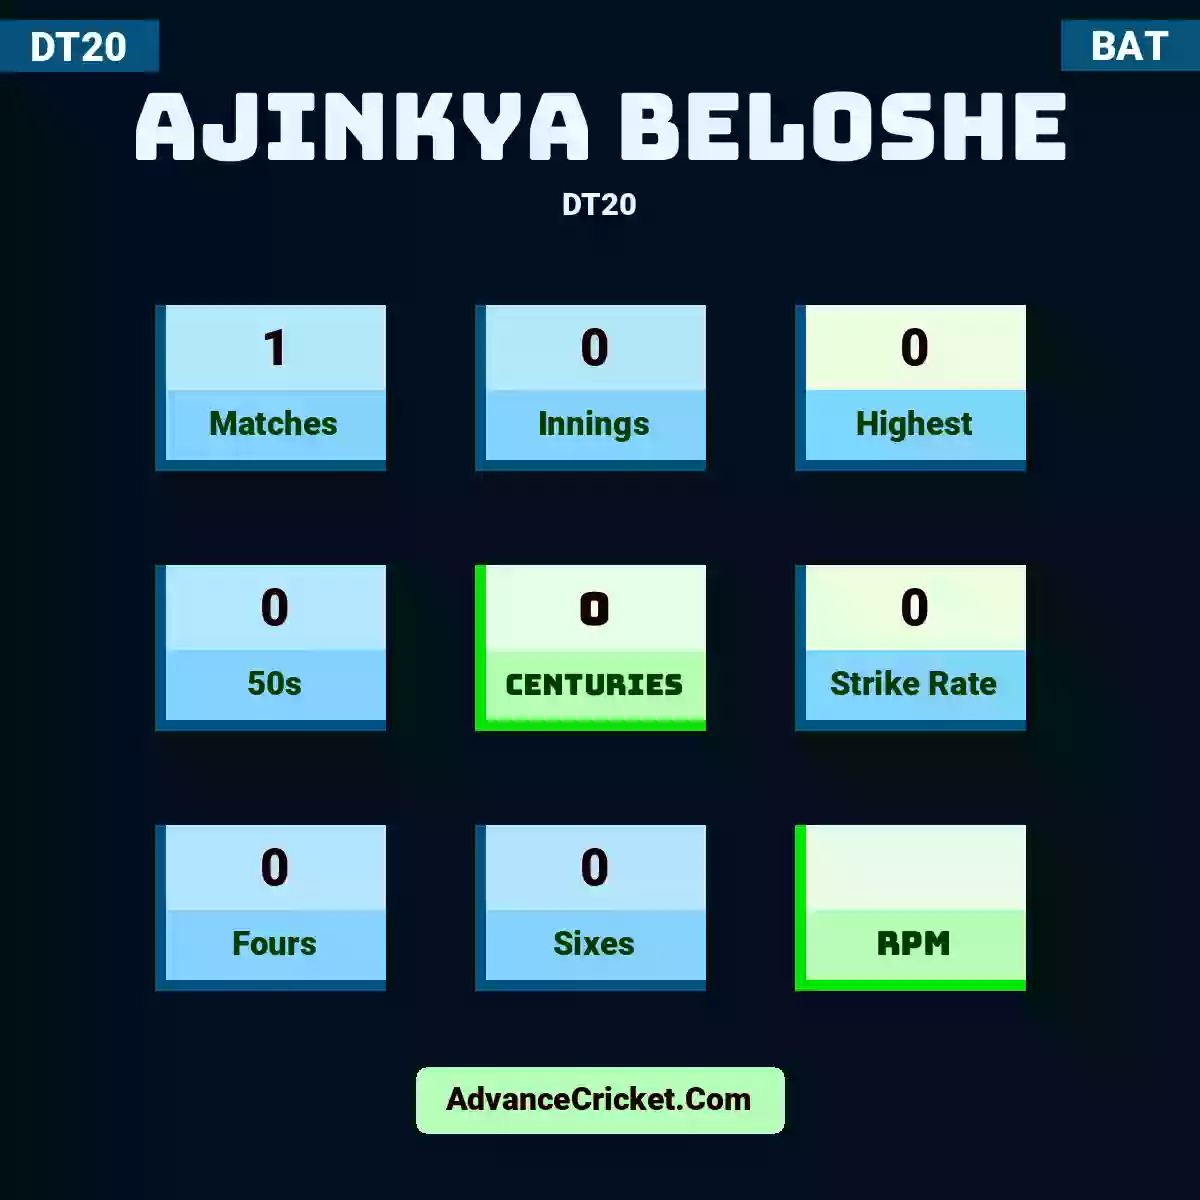 Ajinkya Beloshe DT20 , Ajinkya Beloshe played 1 matches, scored 0 runs as highest, 0 half-centuries, and 0 centuries, with a strike rate of 0. A.Beloshe hit 0 fours and 0 sixes.